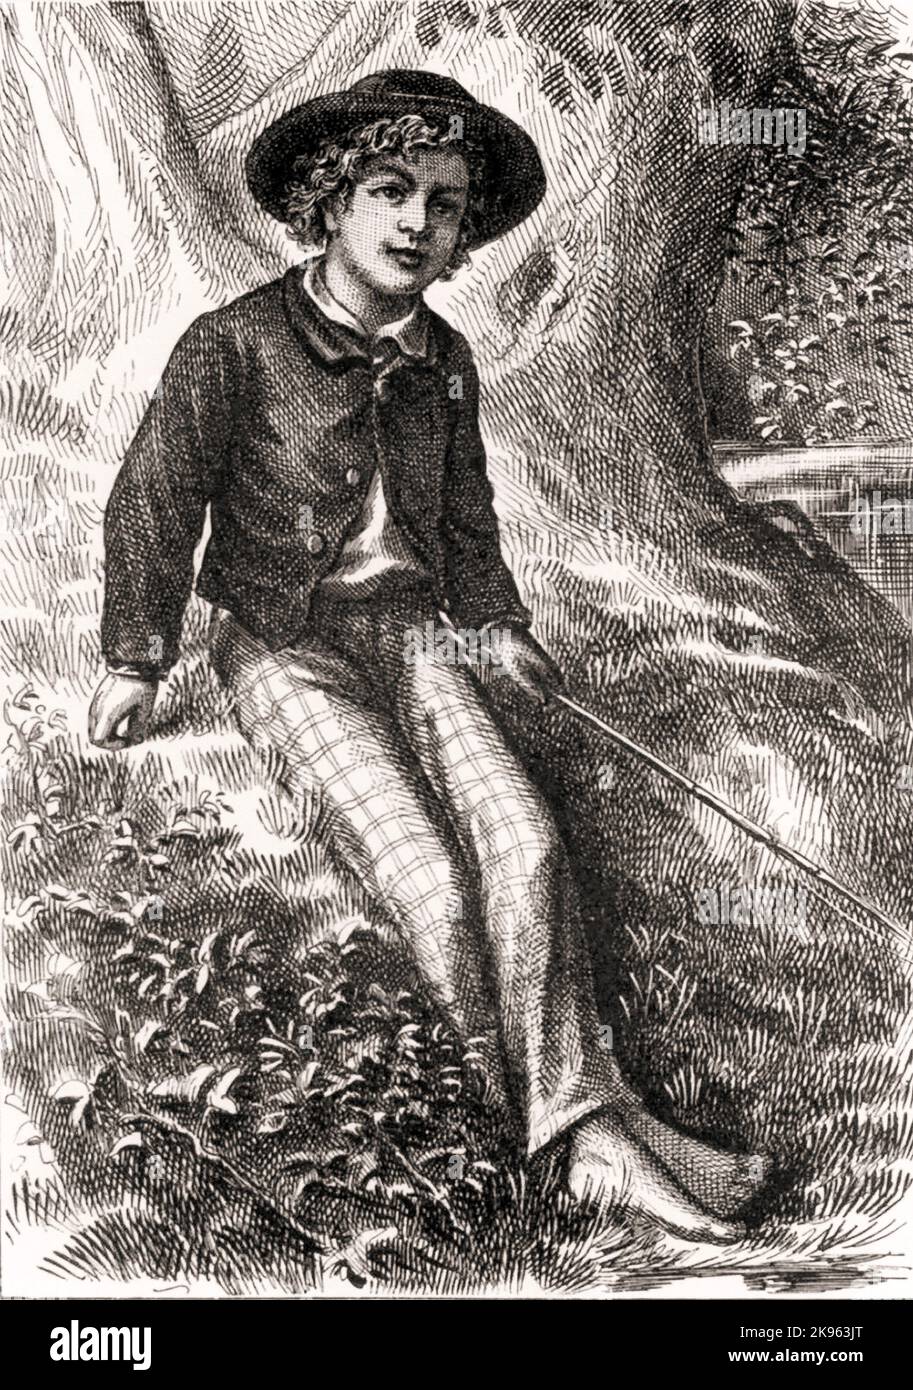 Book Adventures of Tom Sawyer di Mark Twain 1876 frontespiece Foto Stock